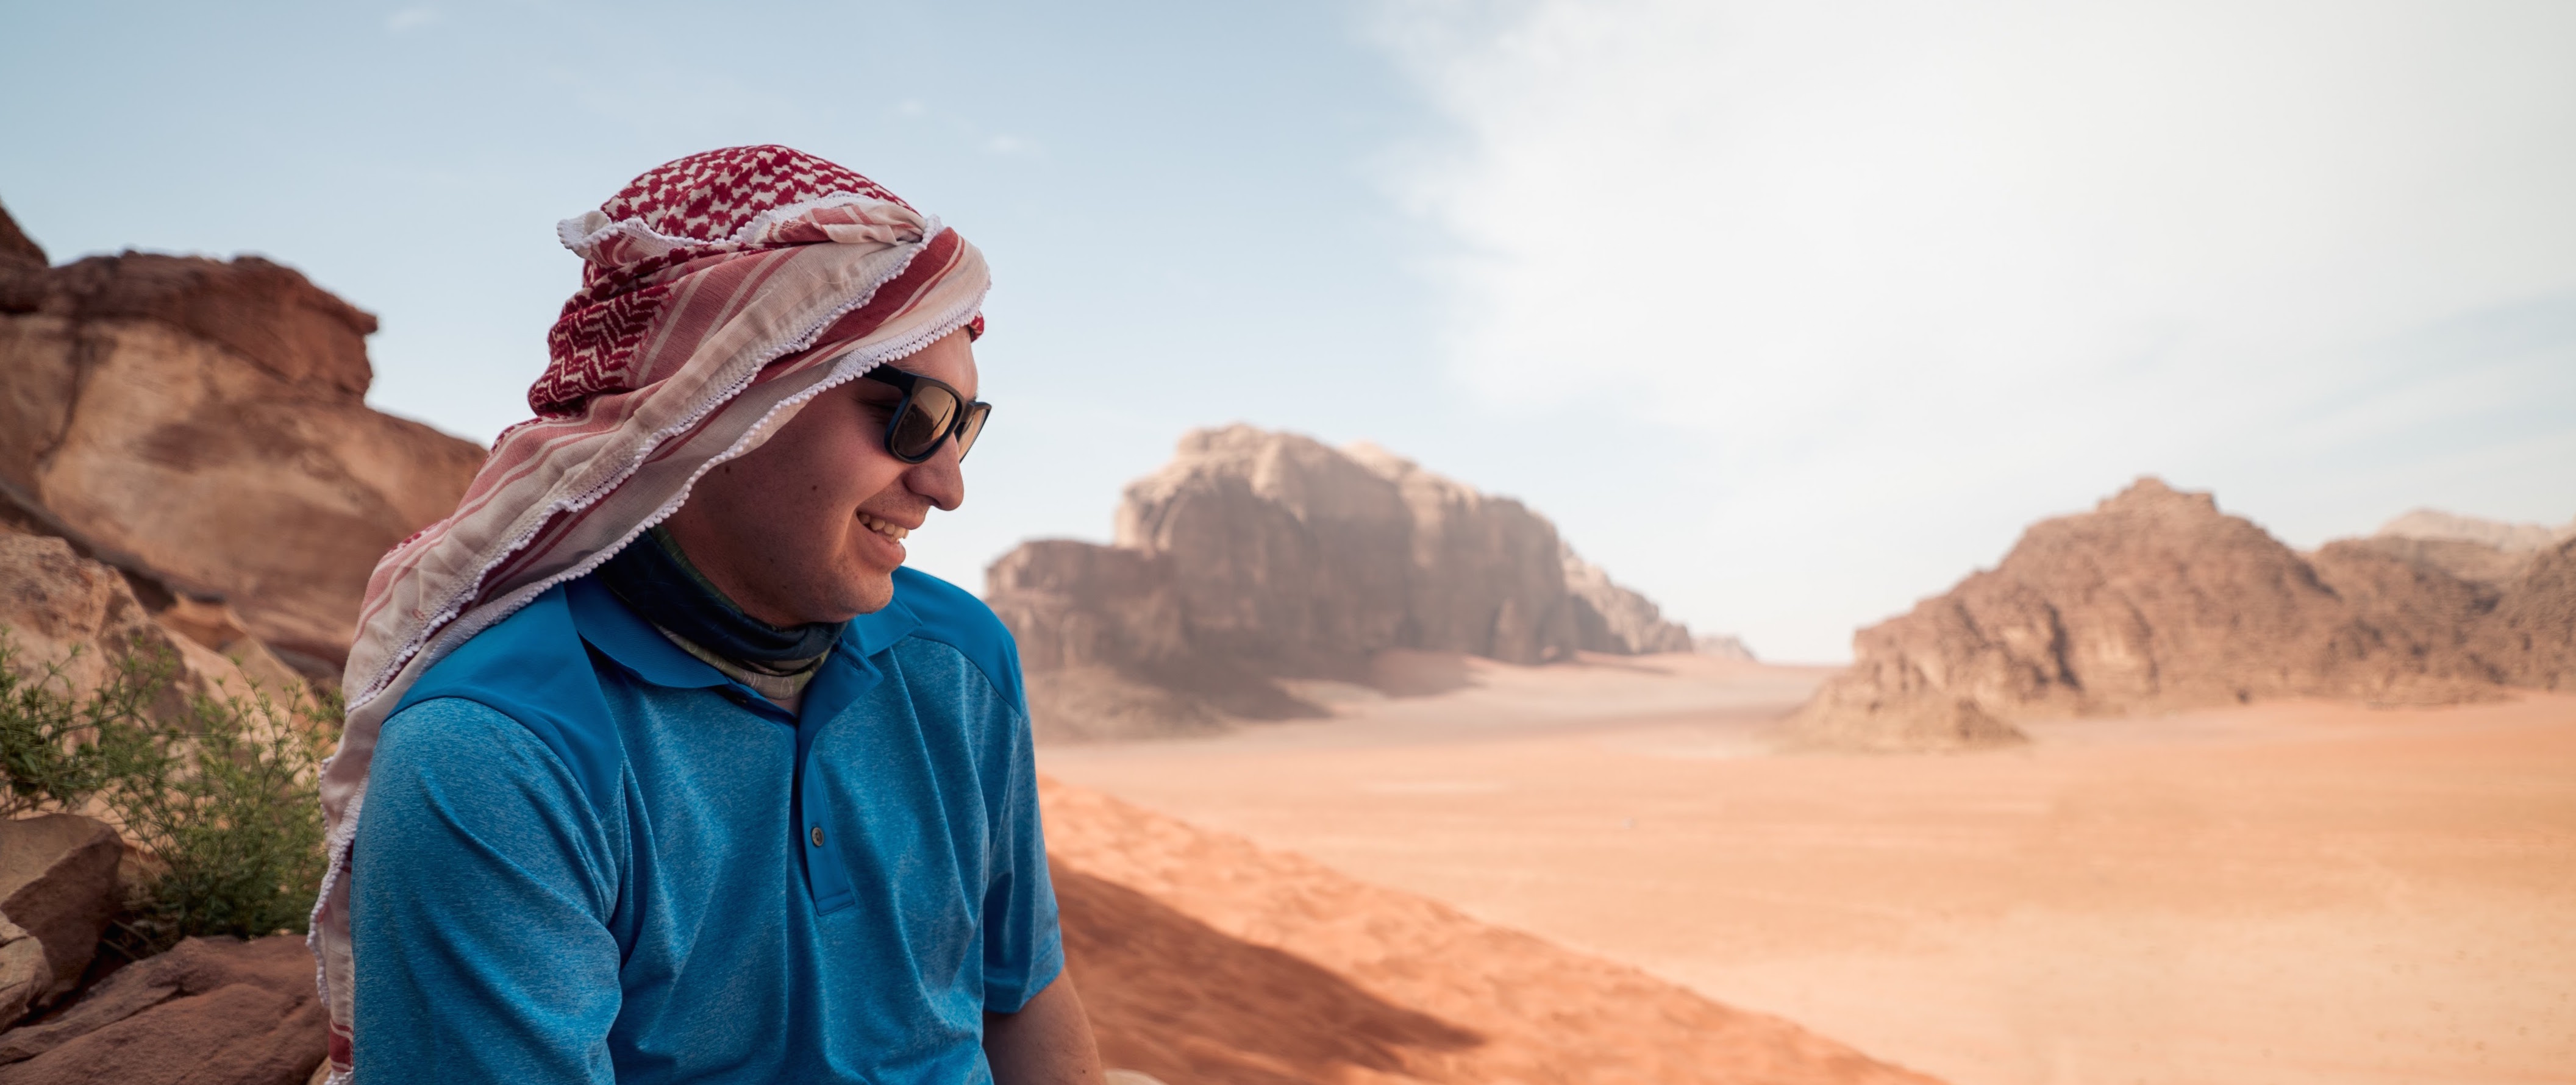 Enjoying the view in Wadi Rum